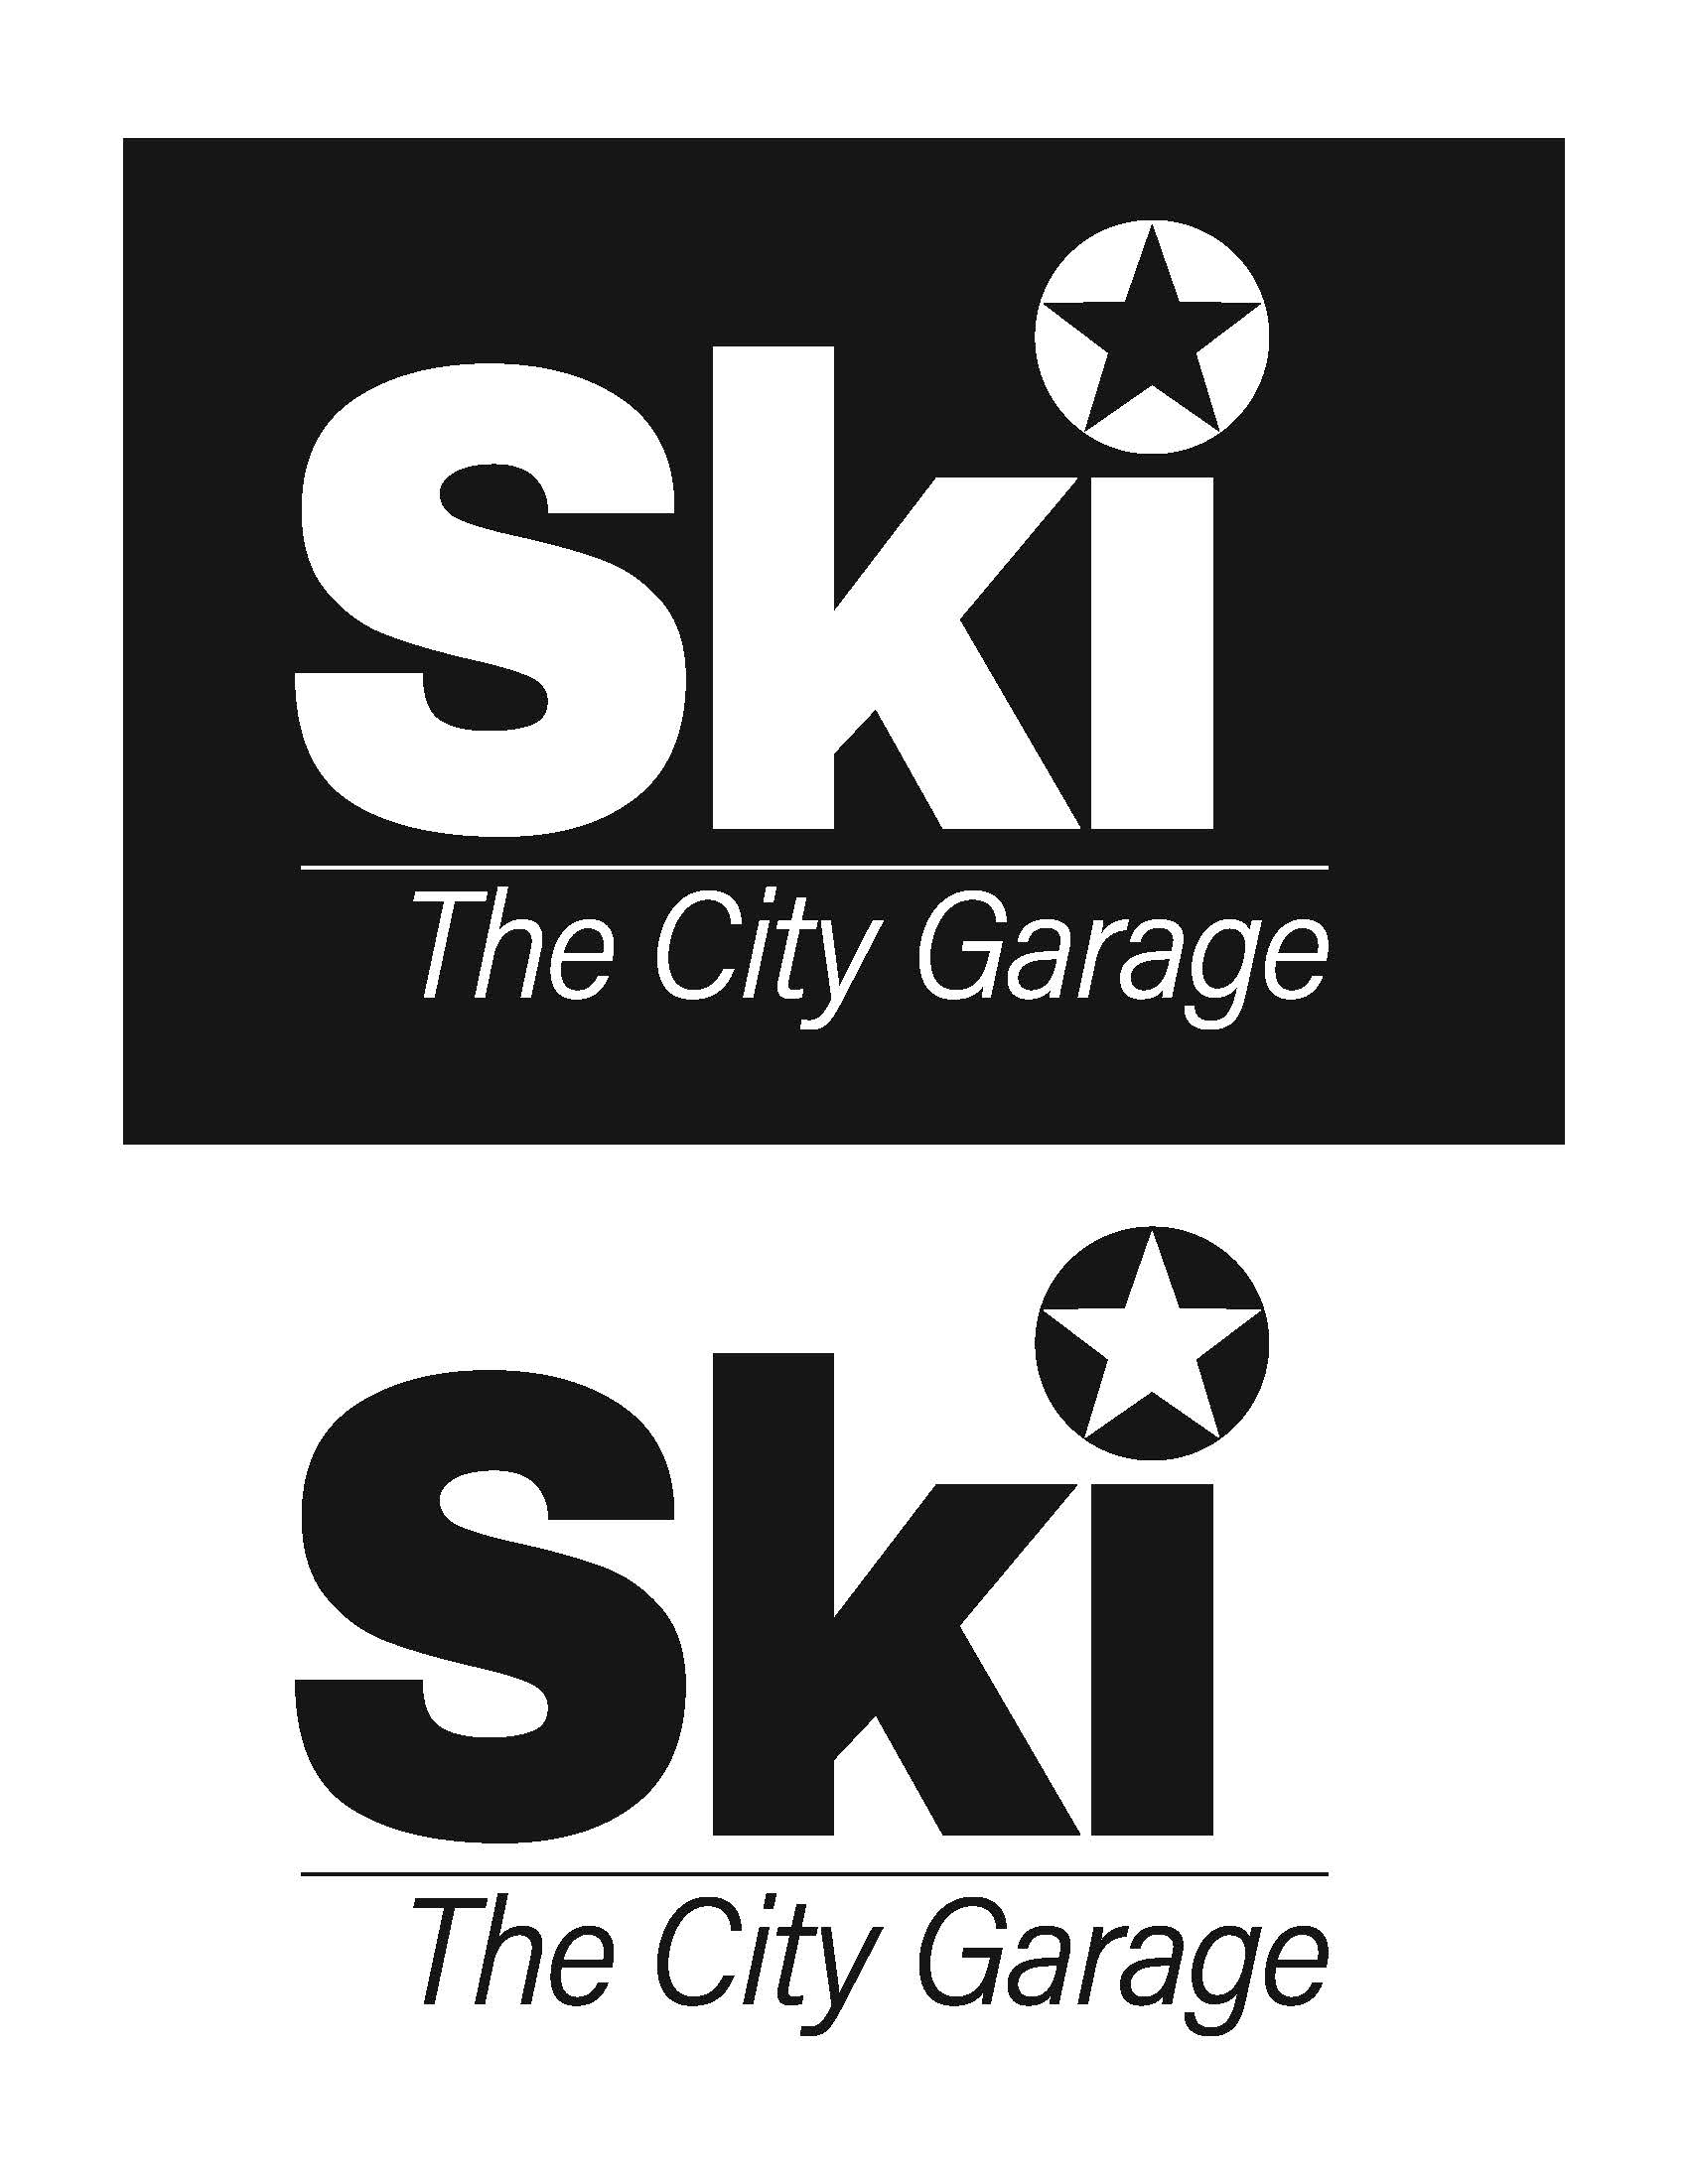 City Garage Logo